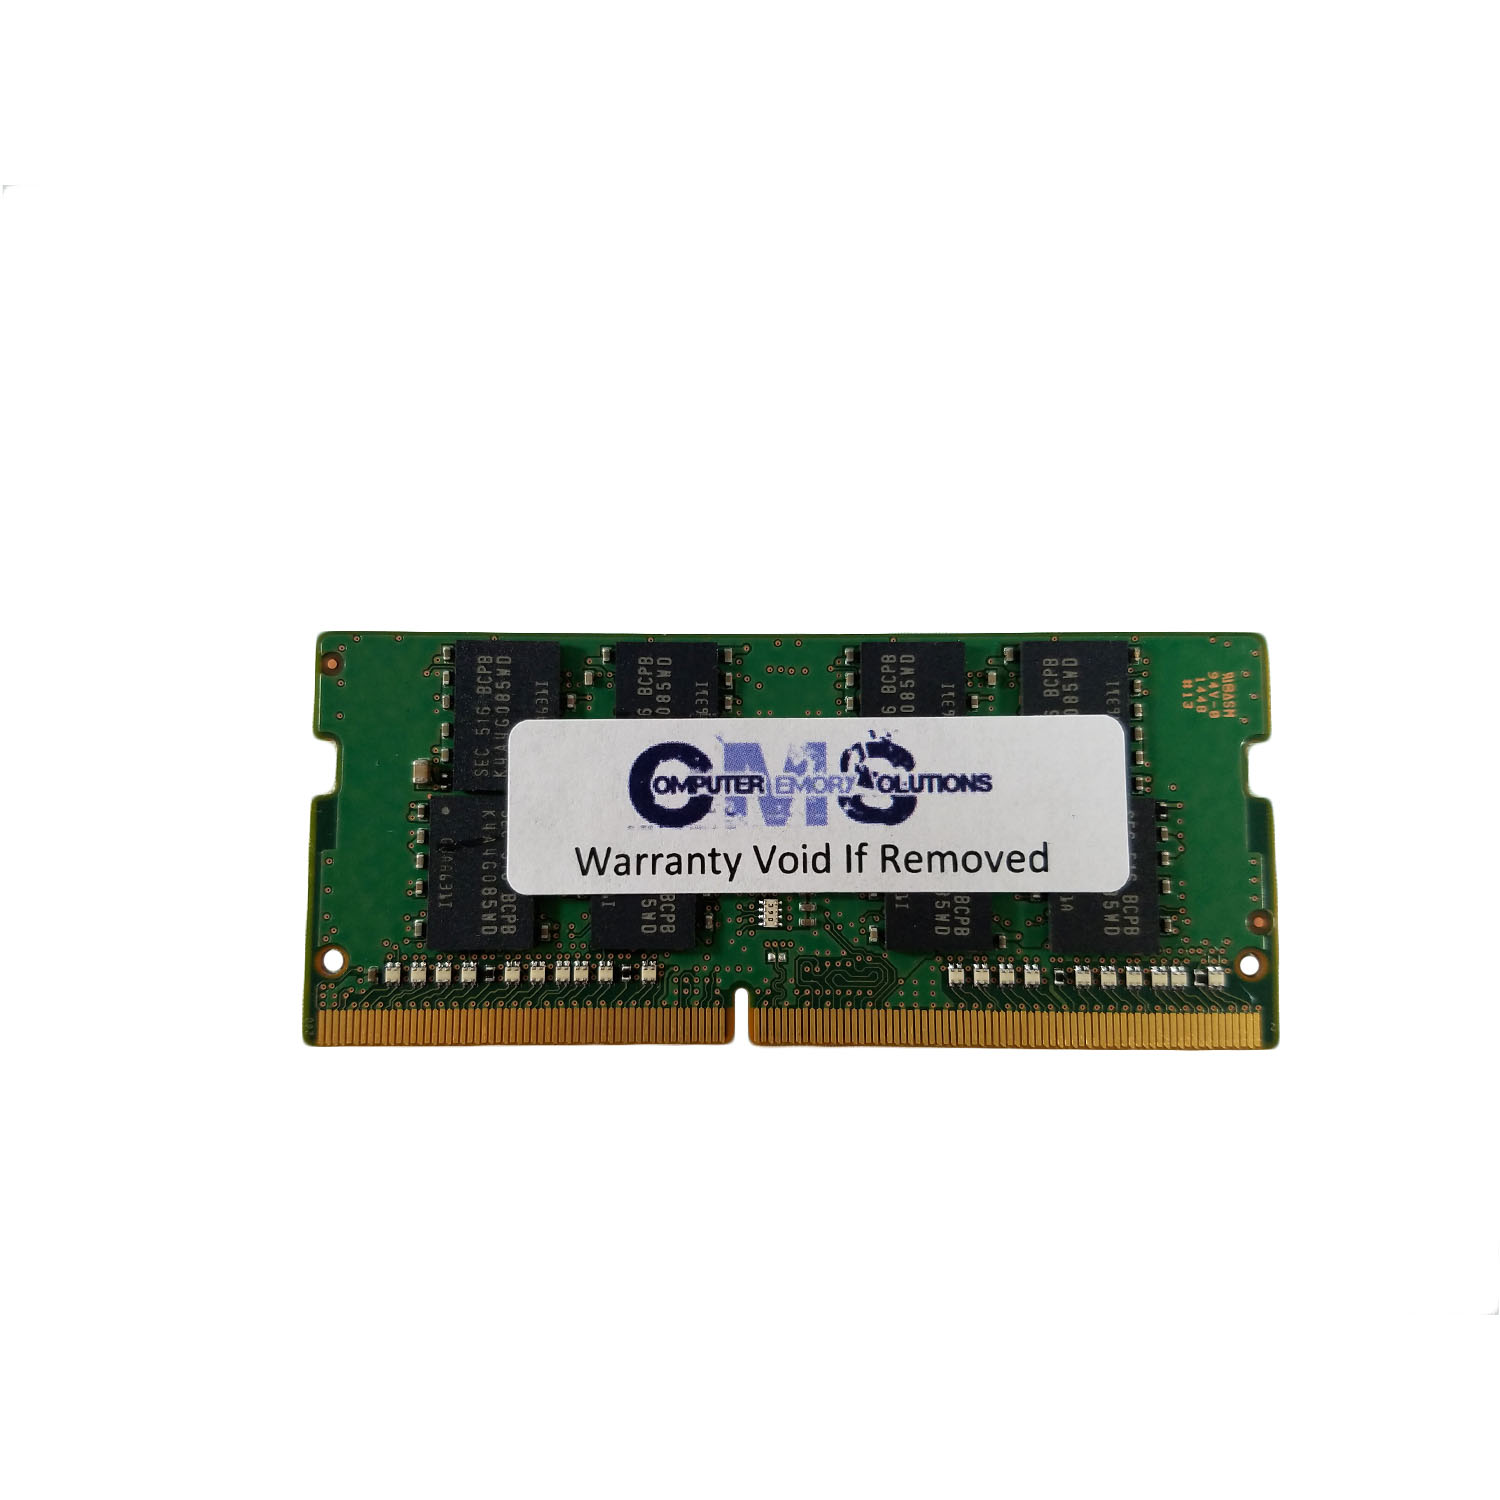 CMS 16GB (1X16GB) DDR4 19200 2400MHZ NON ECC SODIMM Memory Ram Upgrade Compatible with Lenovo® ThinkPad T480s, ThinkPad Yoga 260, Lenovo® V330 (15) - C107 - image 1 of 3